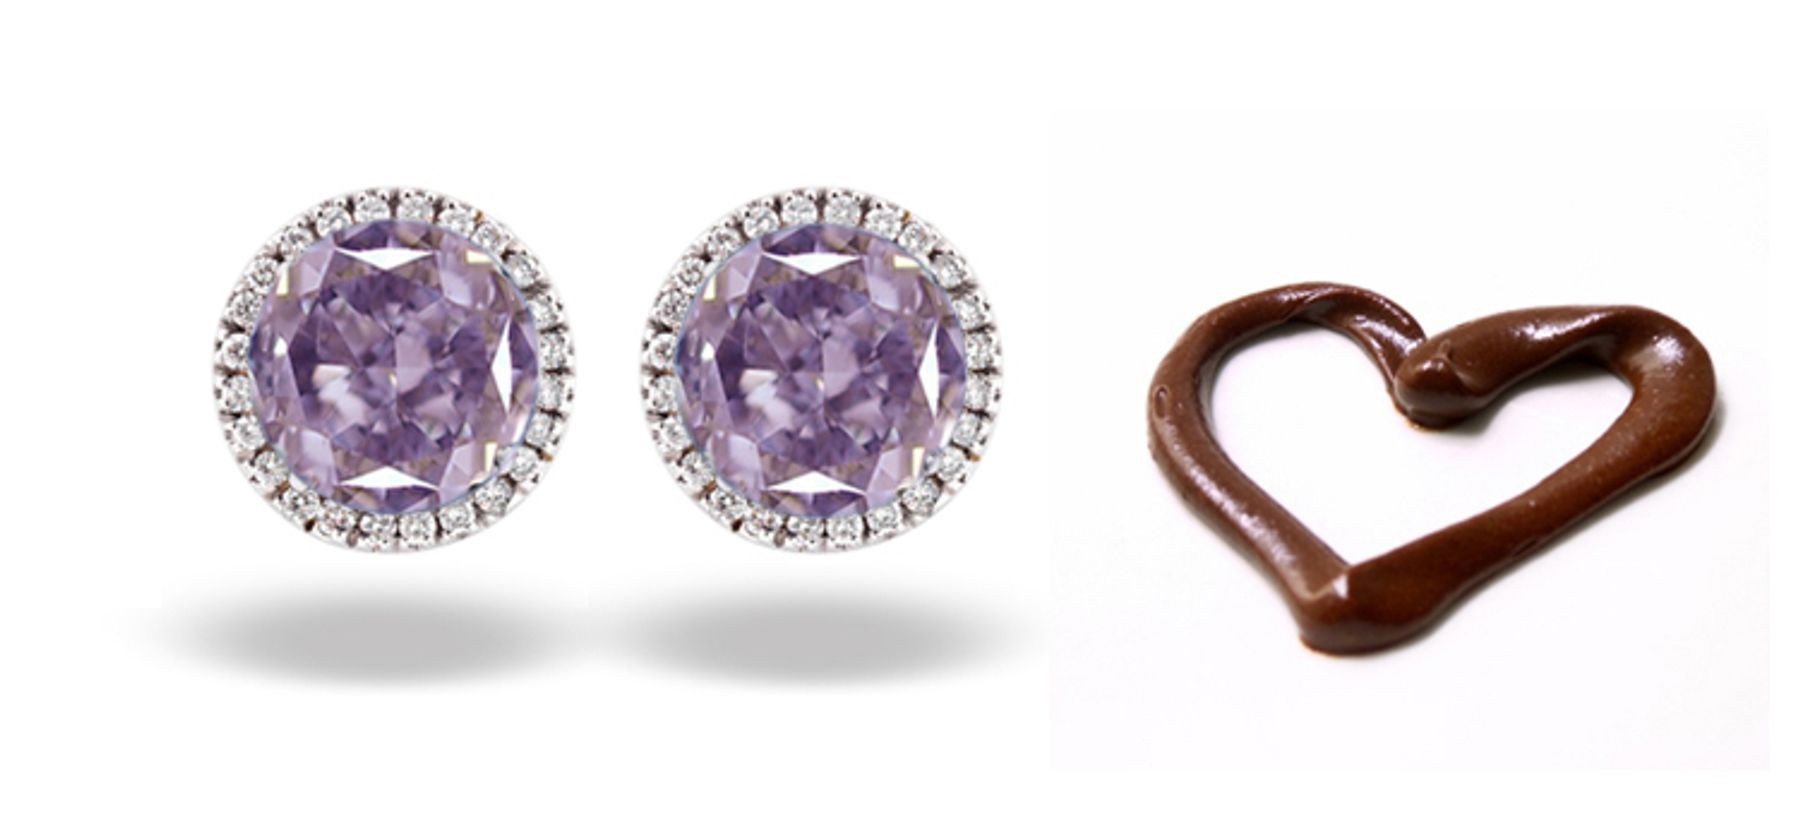 Unique Colored Diamonds Designer Collection - Women'ds Pink Colored Diamonds & White Diamonds Fancy Pink Diamond Cluster Earrings